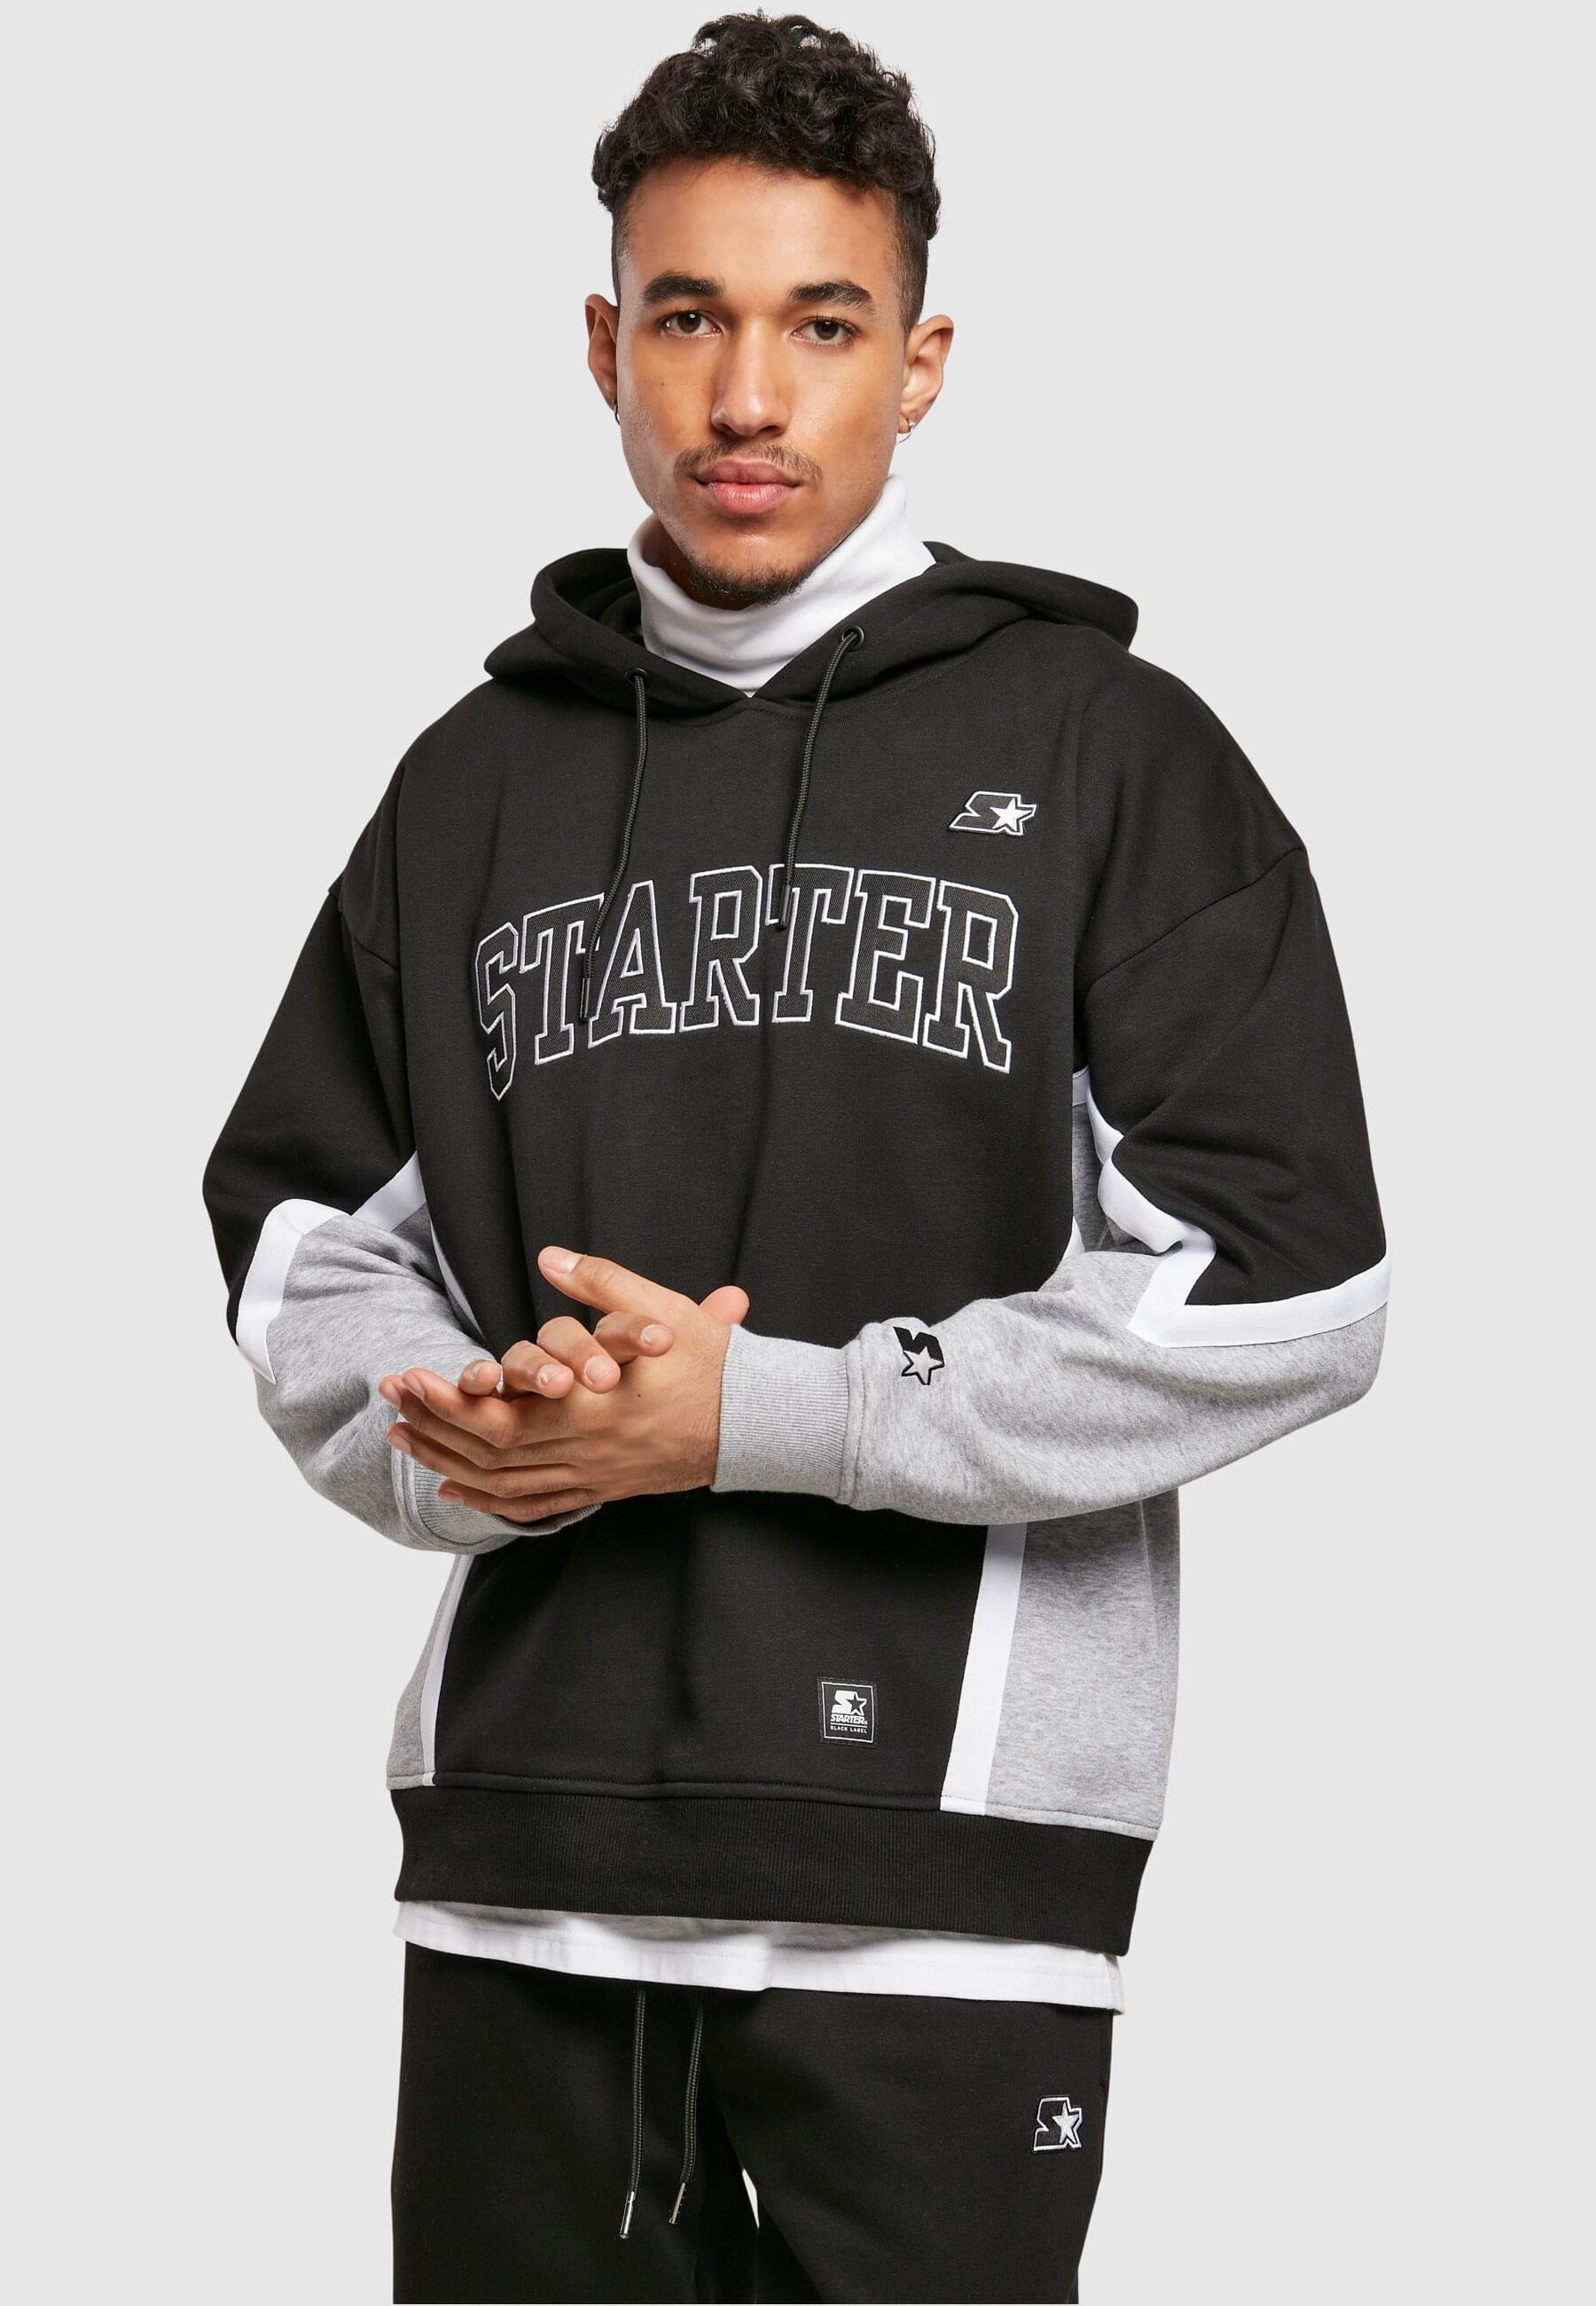 Starter Black Label Sweatshirt »Starter Black Label Herren Starter Throwback Hoody«, (1 tlg.)